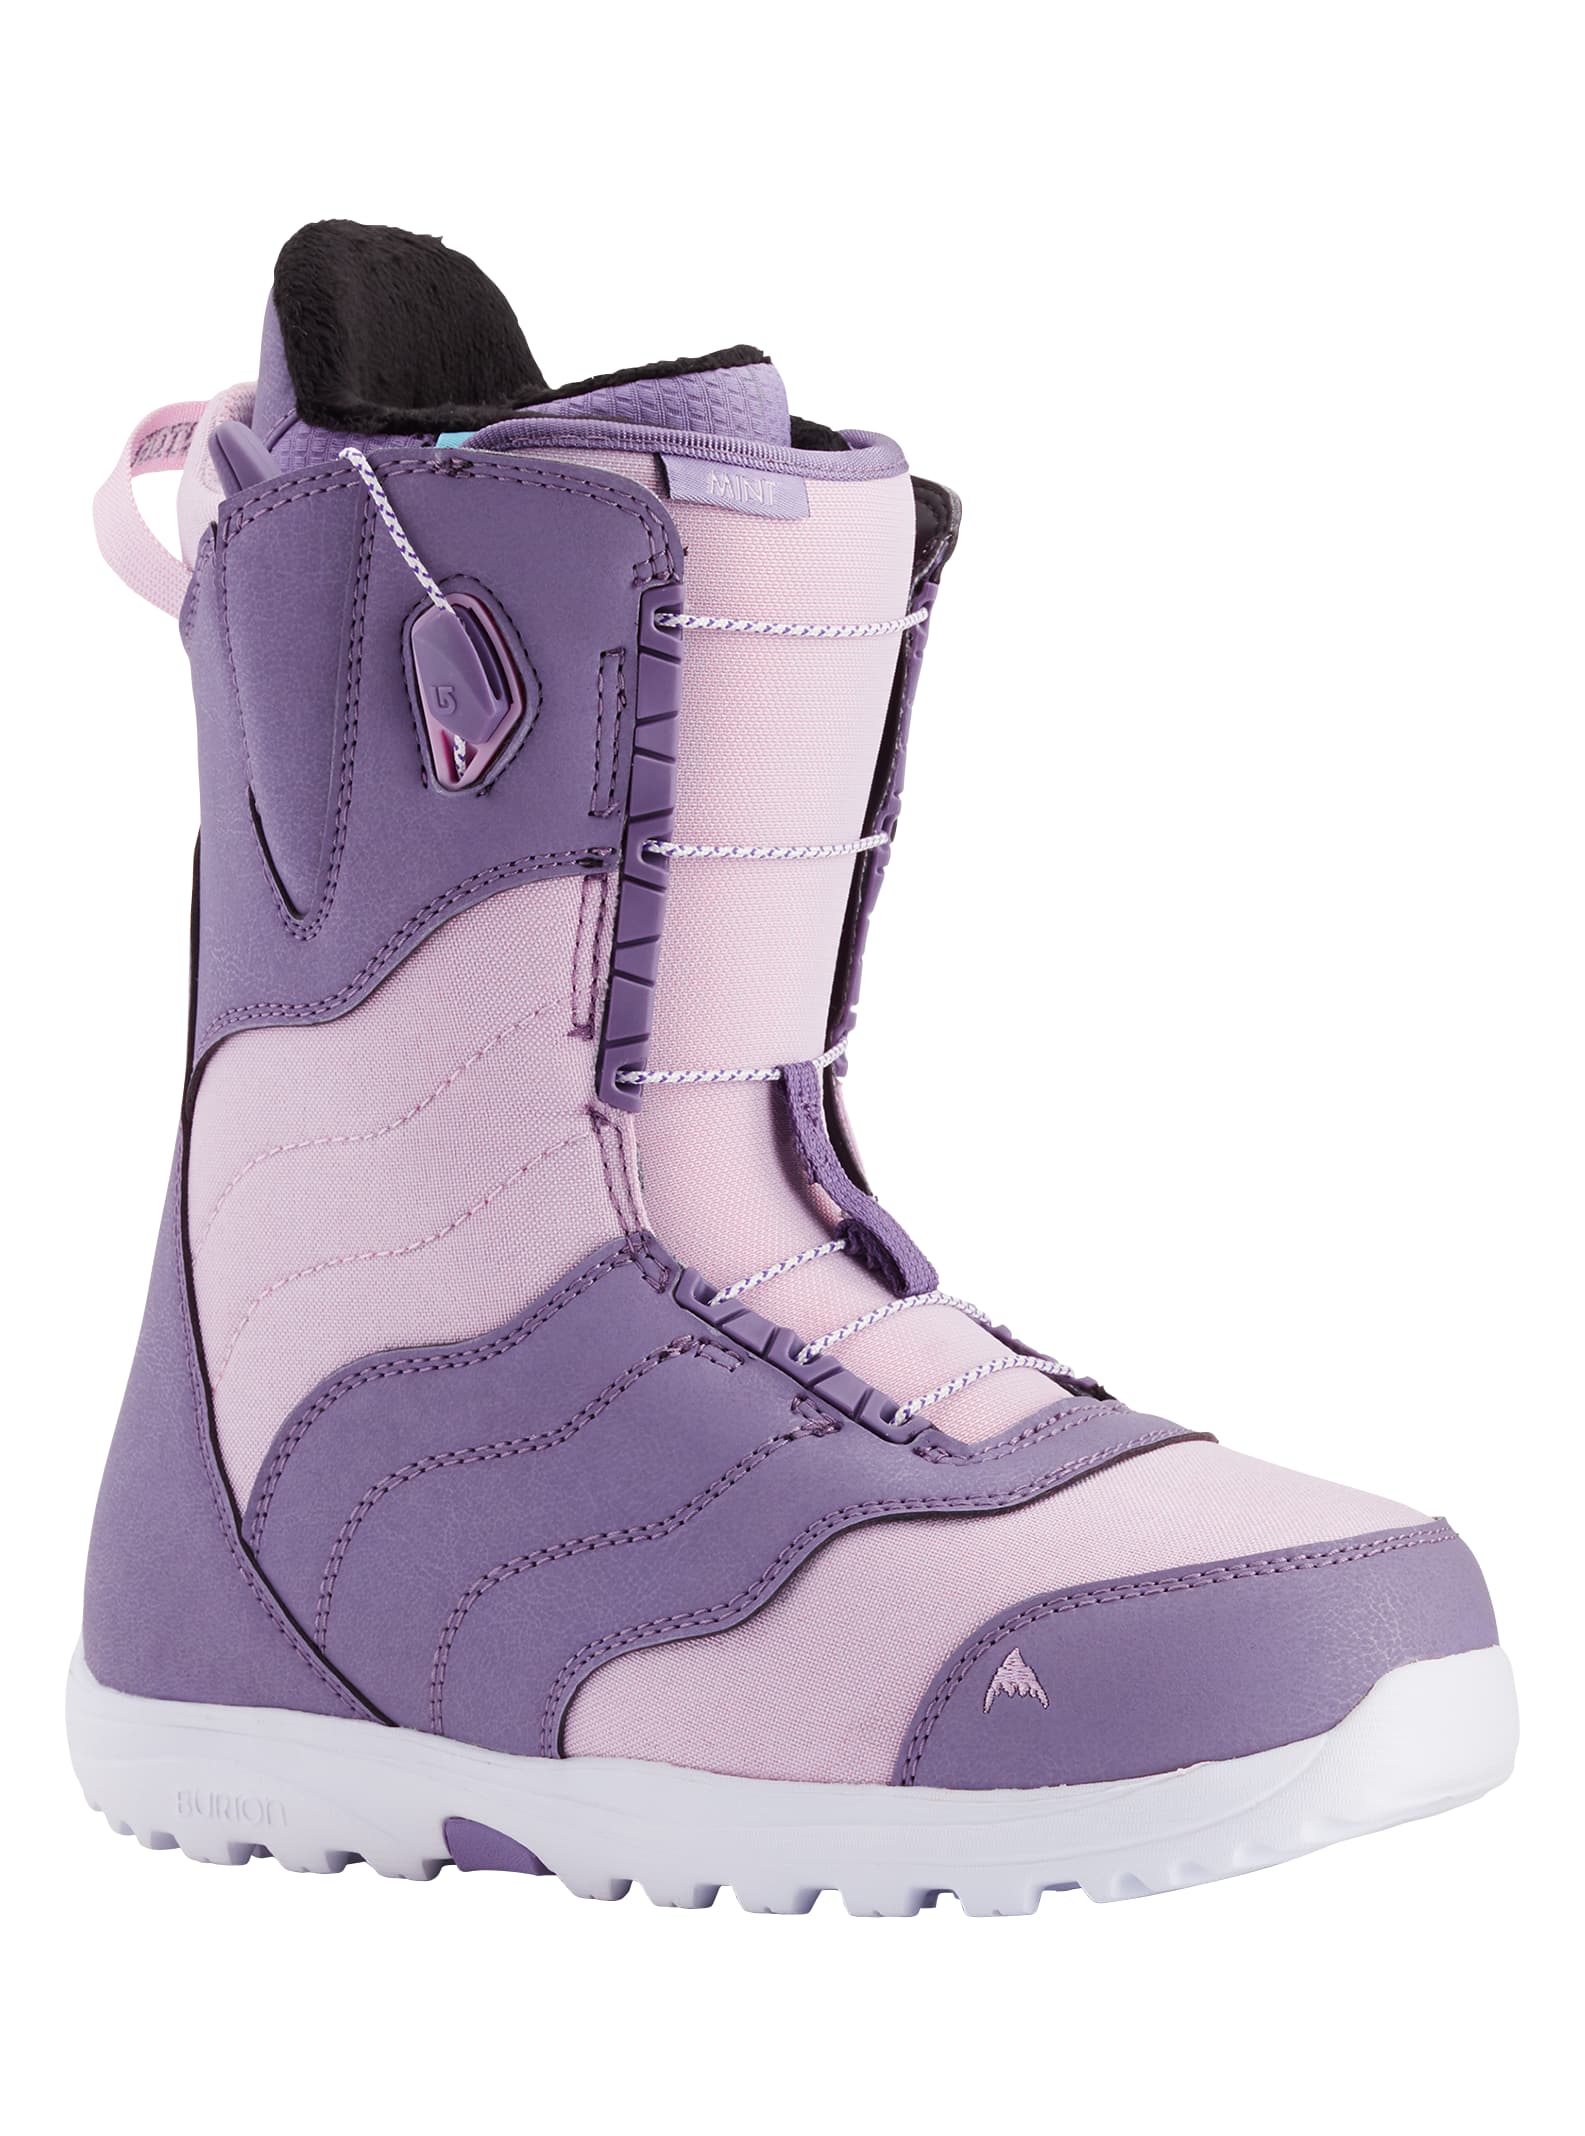 Burton / Women's Mint Snowboard Boot